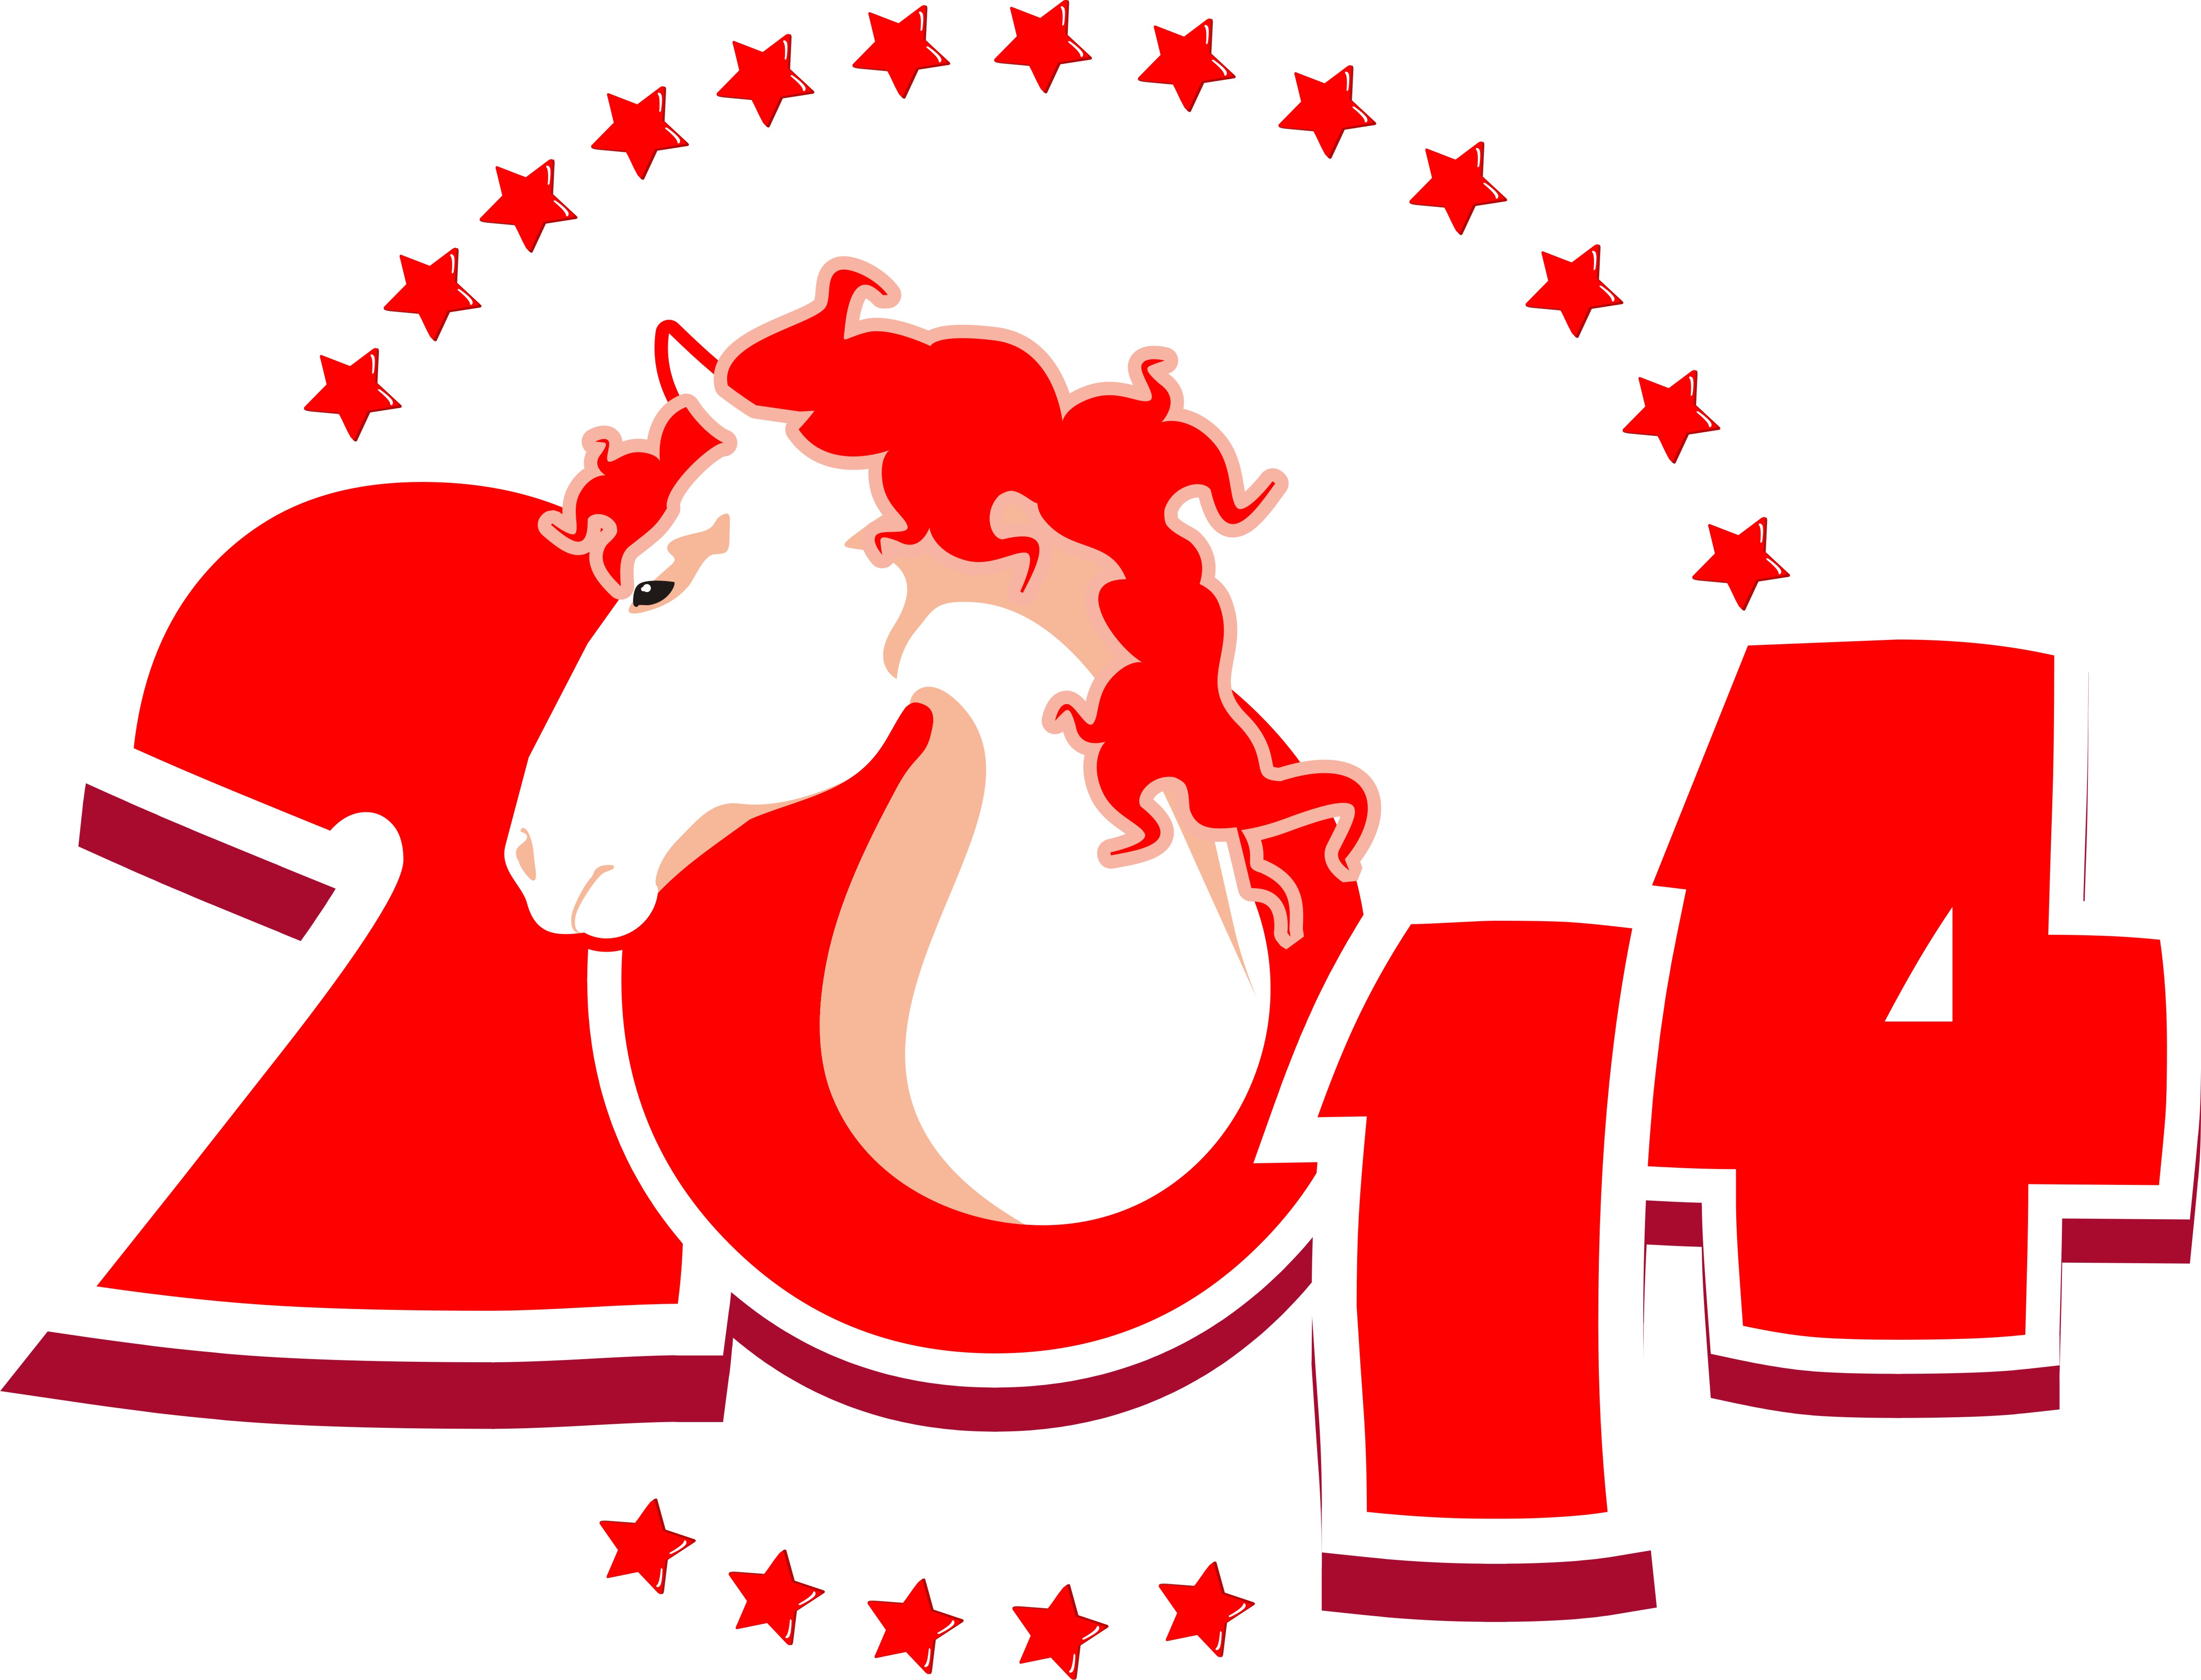 Creative 2014 horses vector graphic 03 vector graphic horses horse creative 2014   